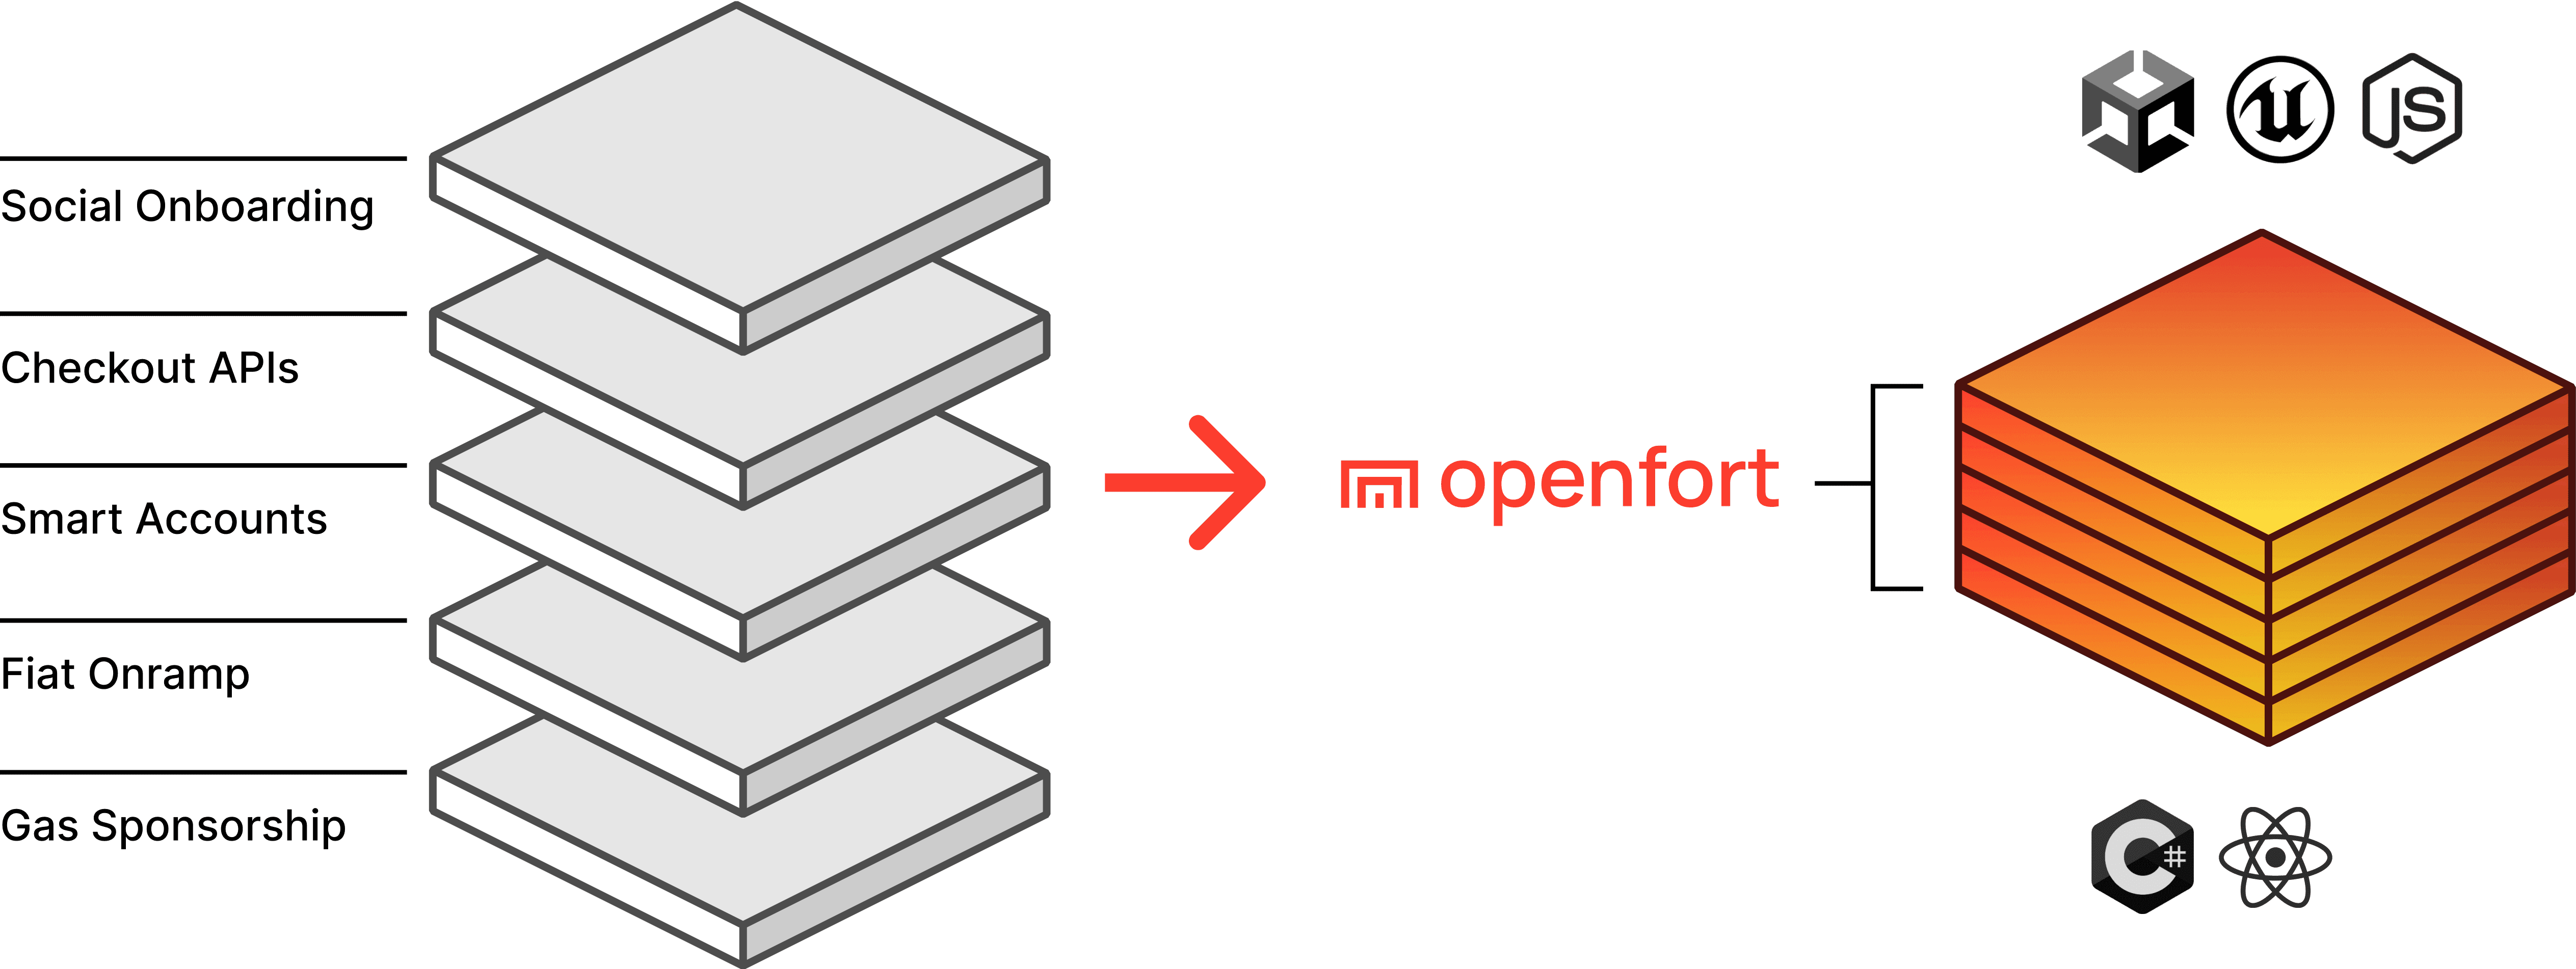 Openfort architecture